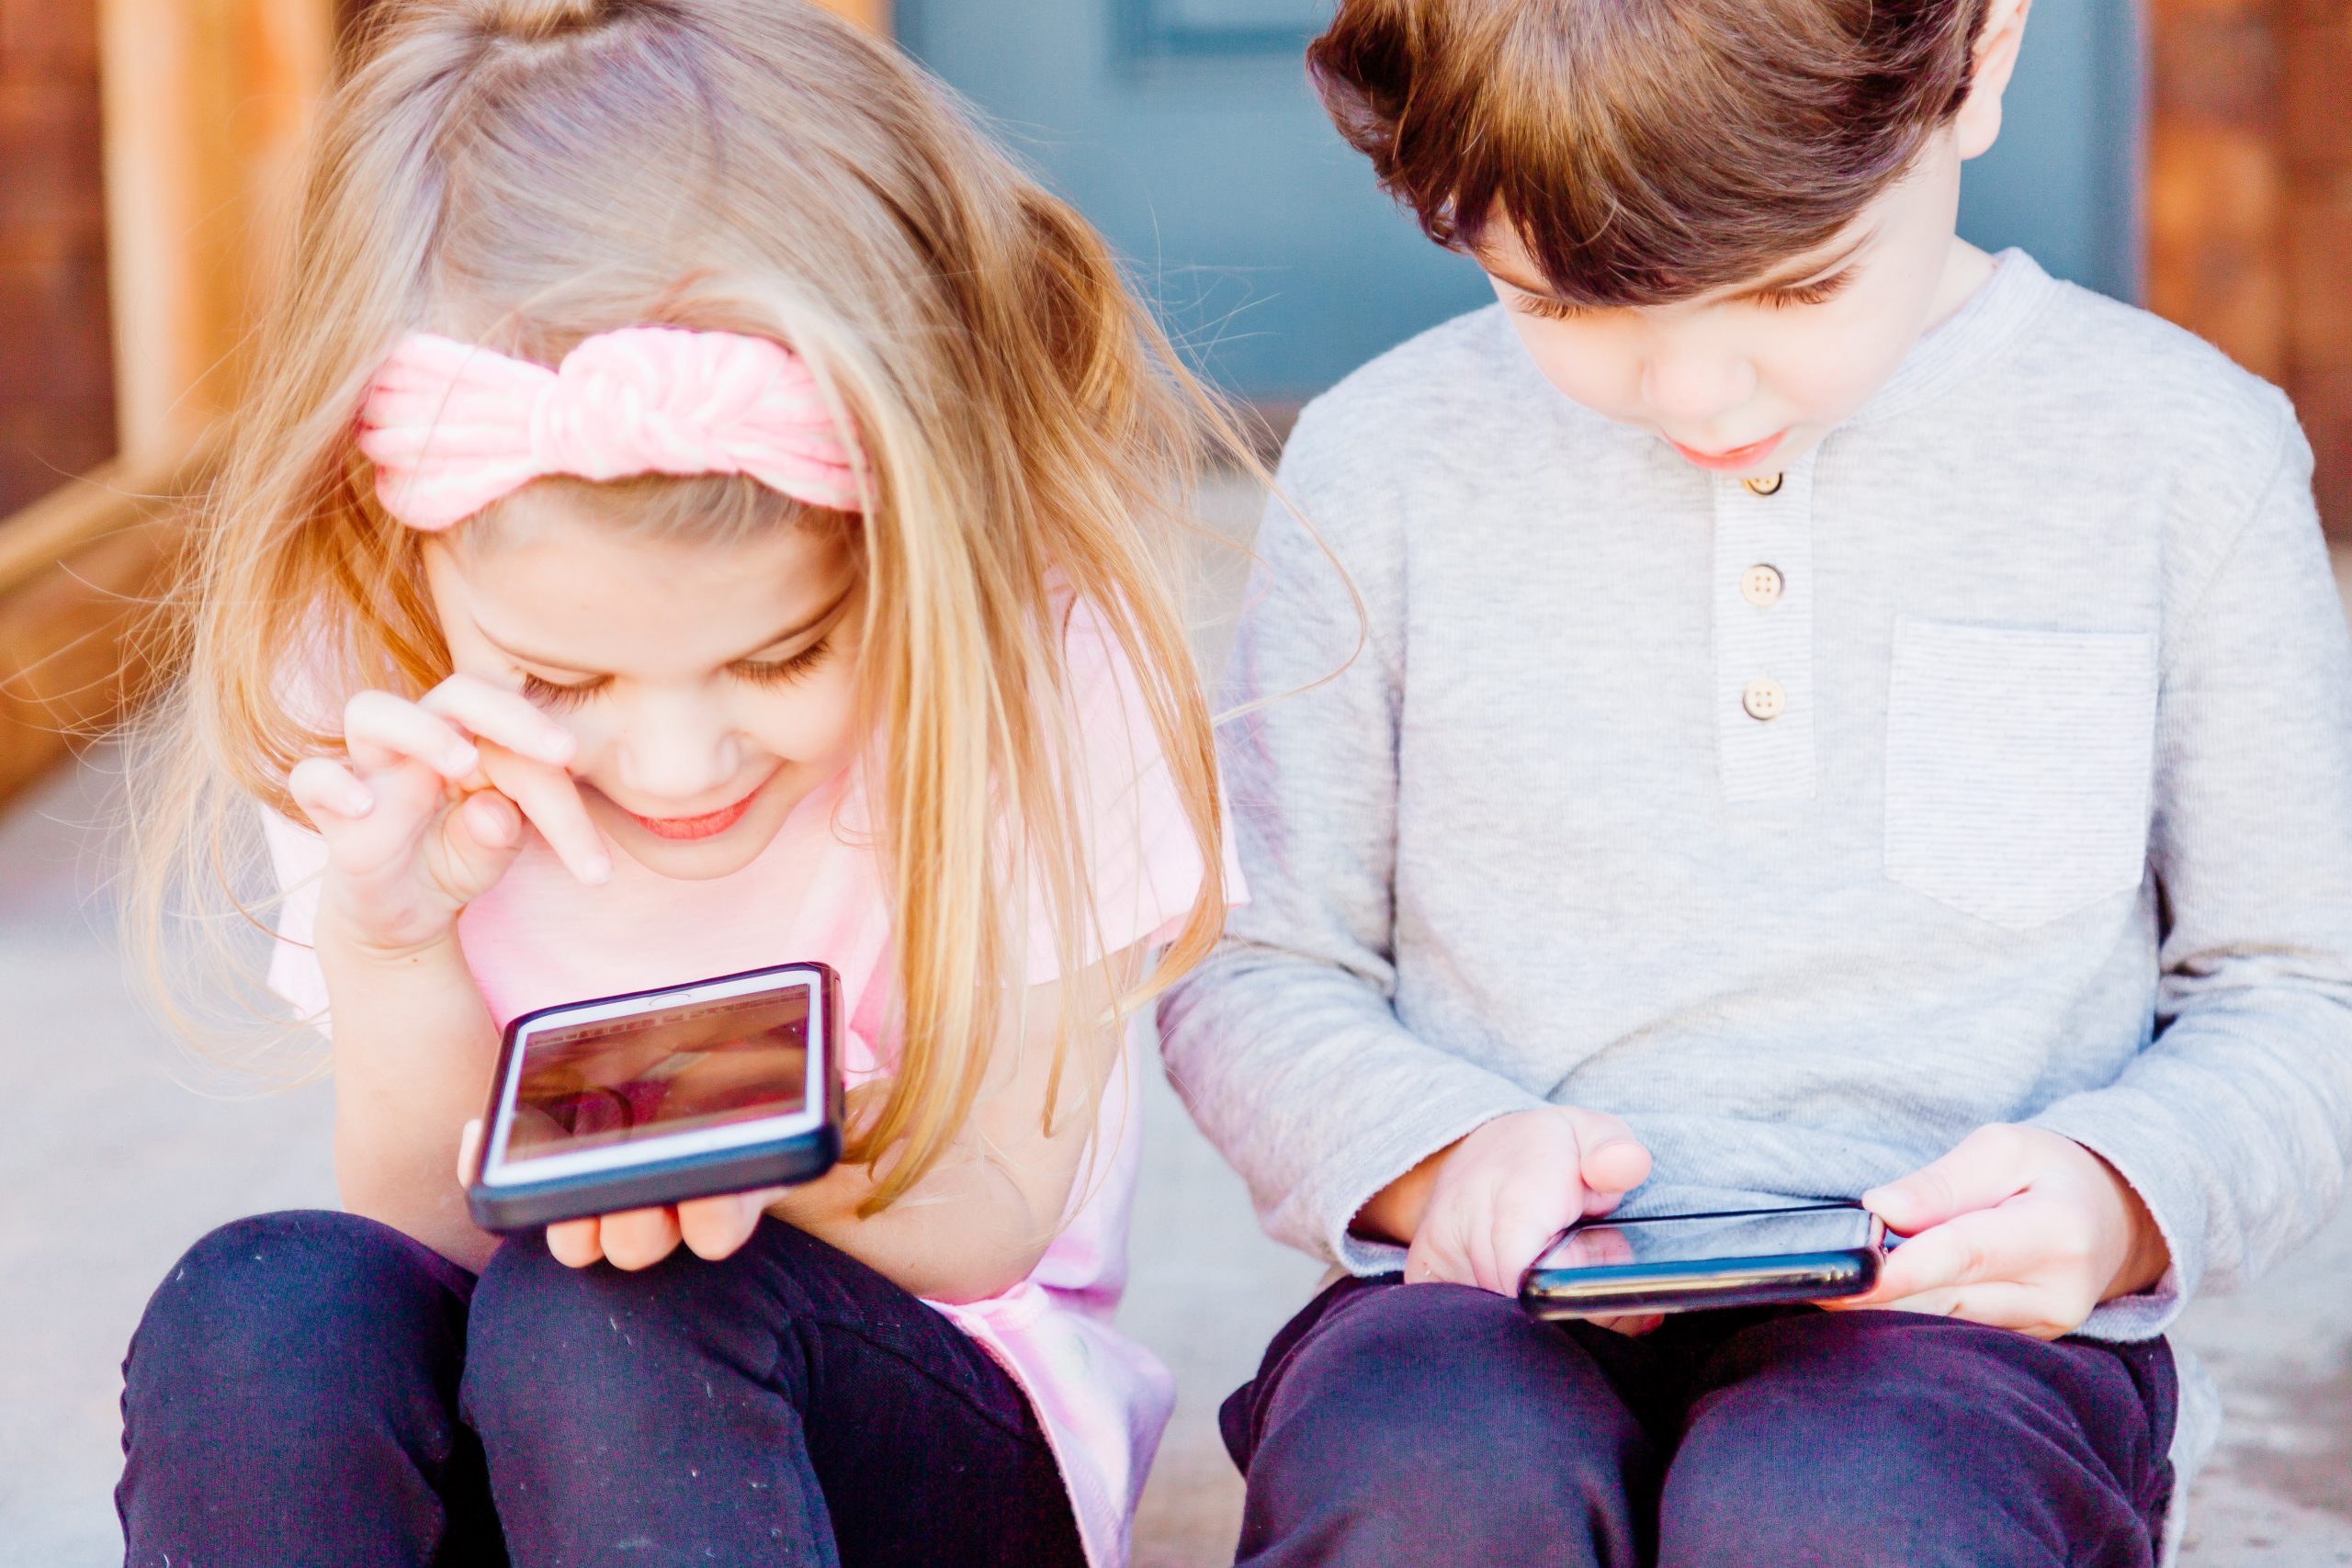 Kids using smartphones and looking at social media